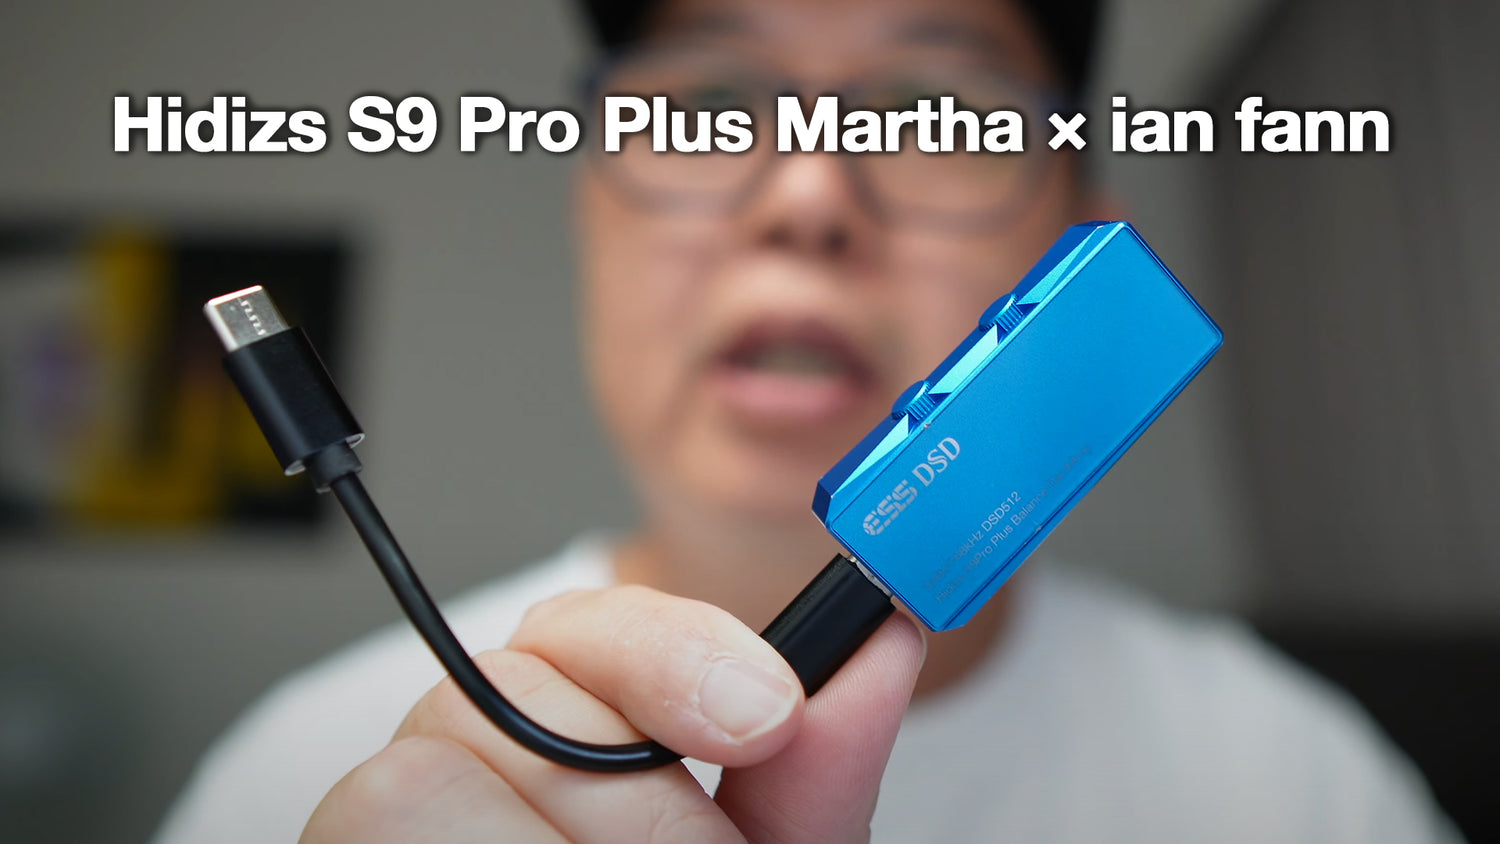 Hidizs S9 Pro Plus Martha Review - ian fann